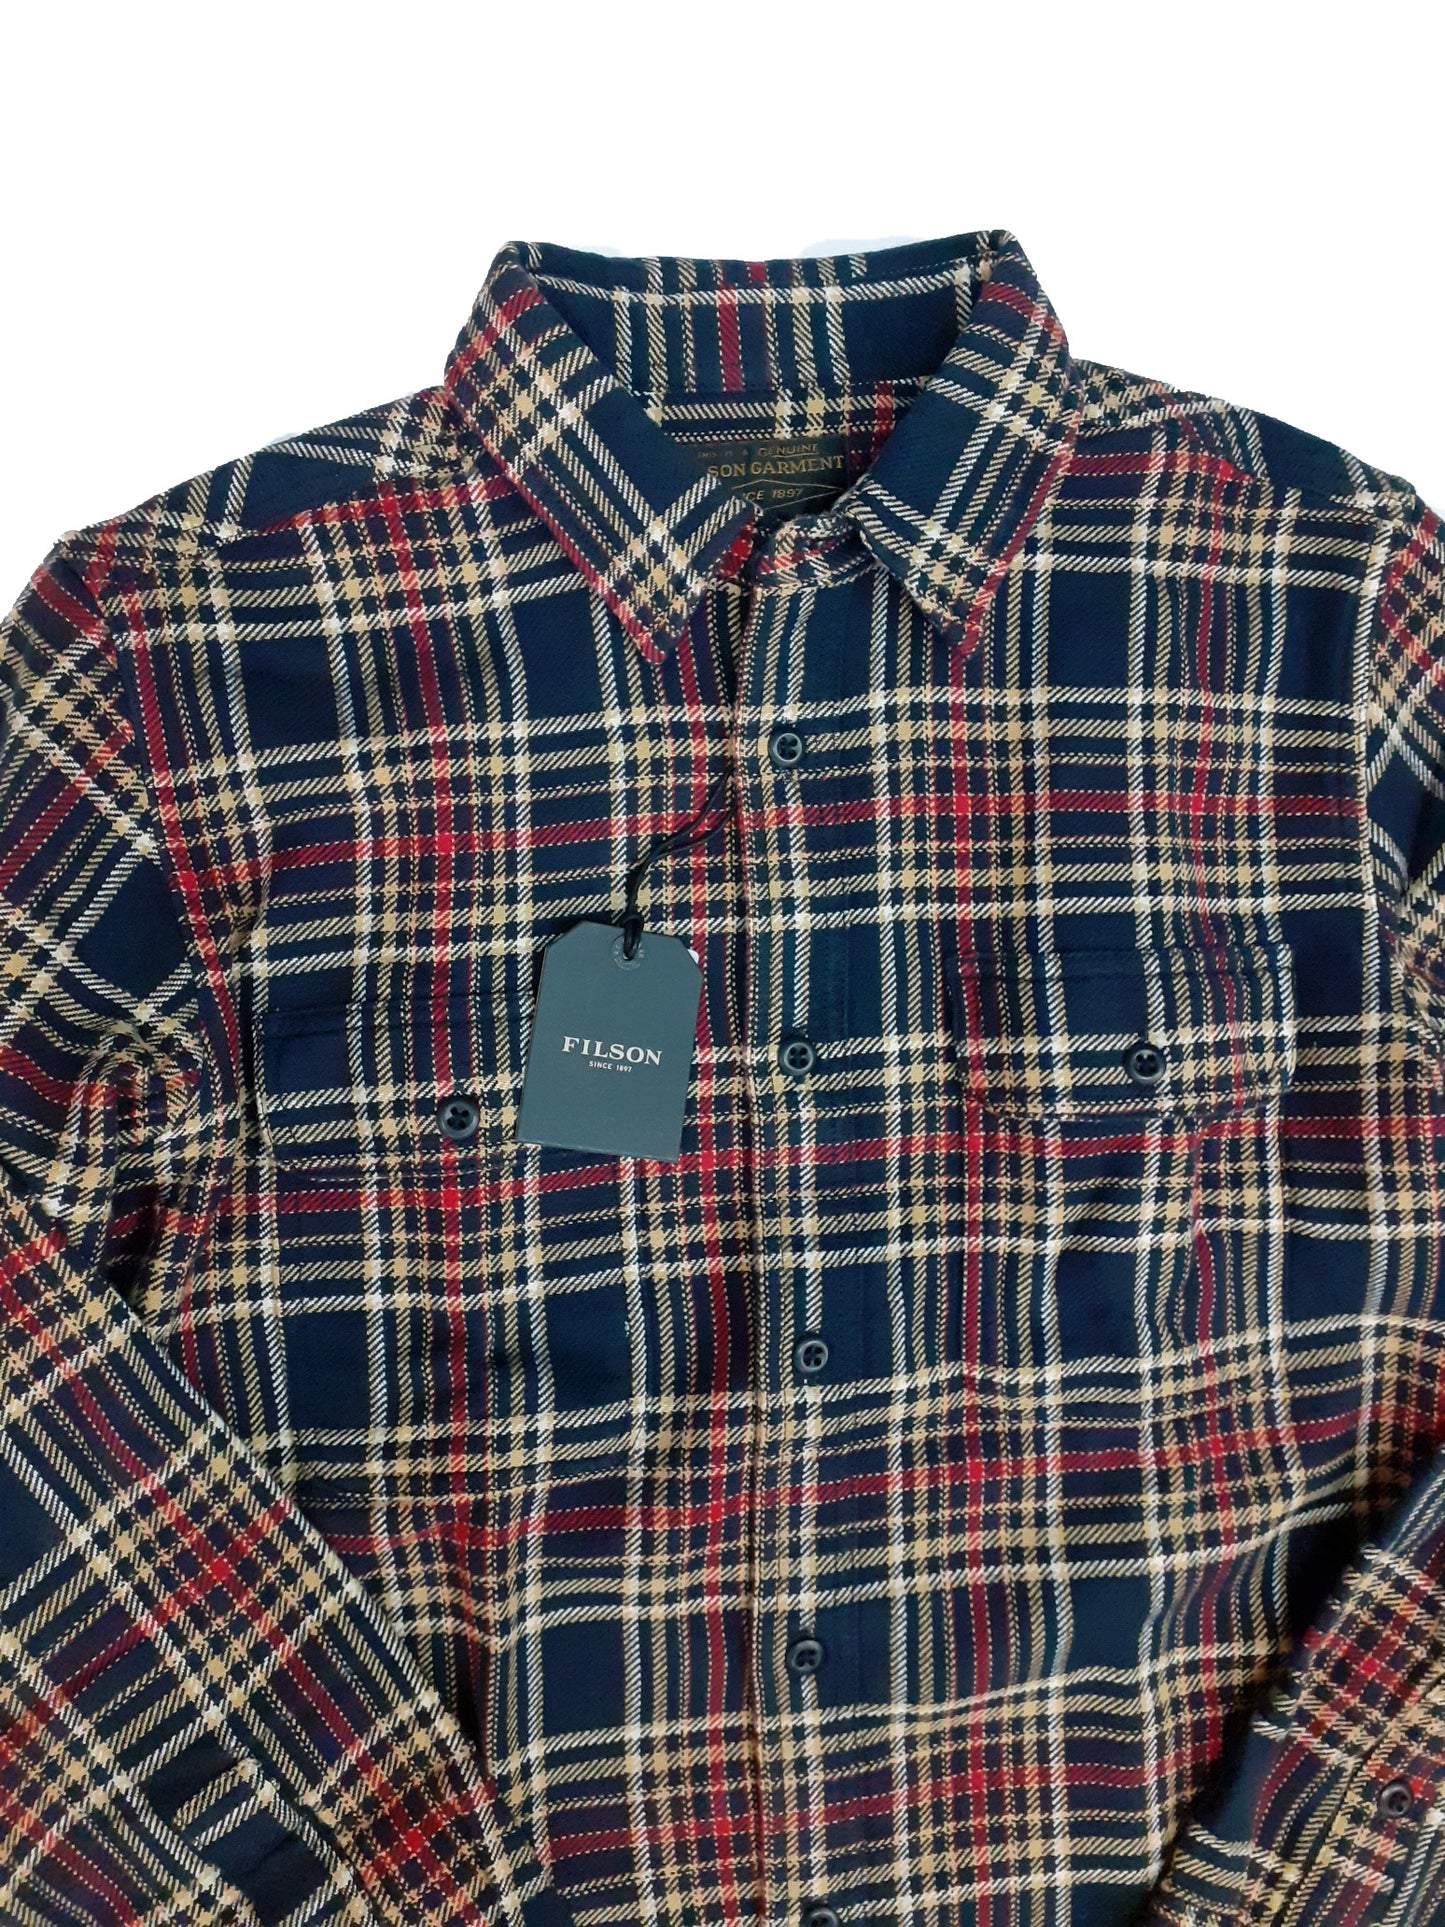 Filson FMCAM0016 409 Vintage Flannel Work Shirt